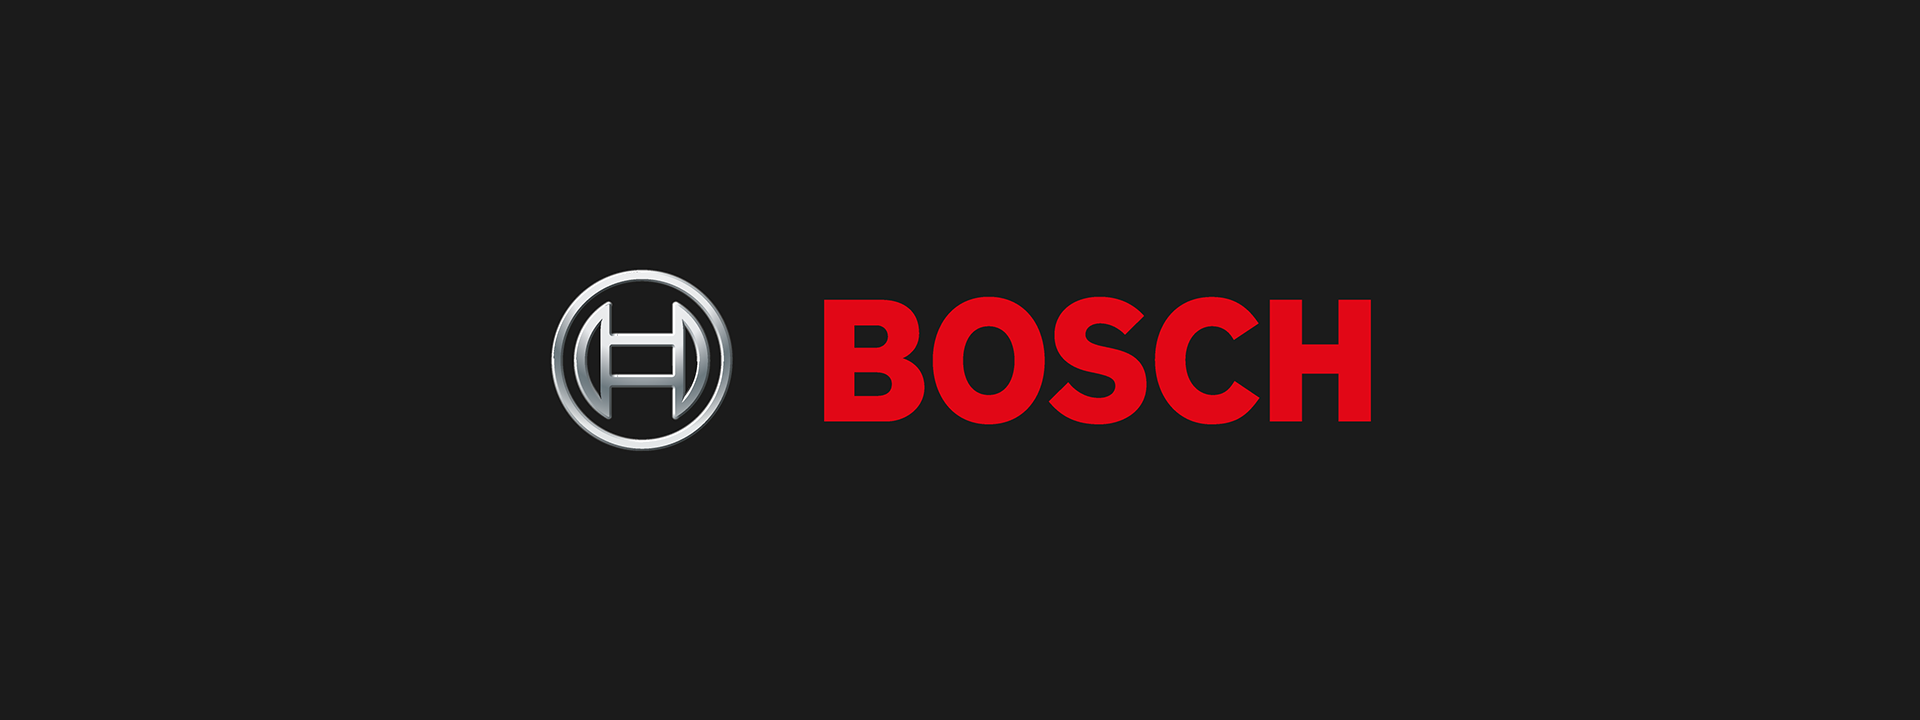 Bosch Aftermarket e Bosch Freios